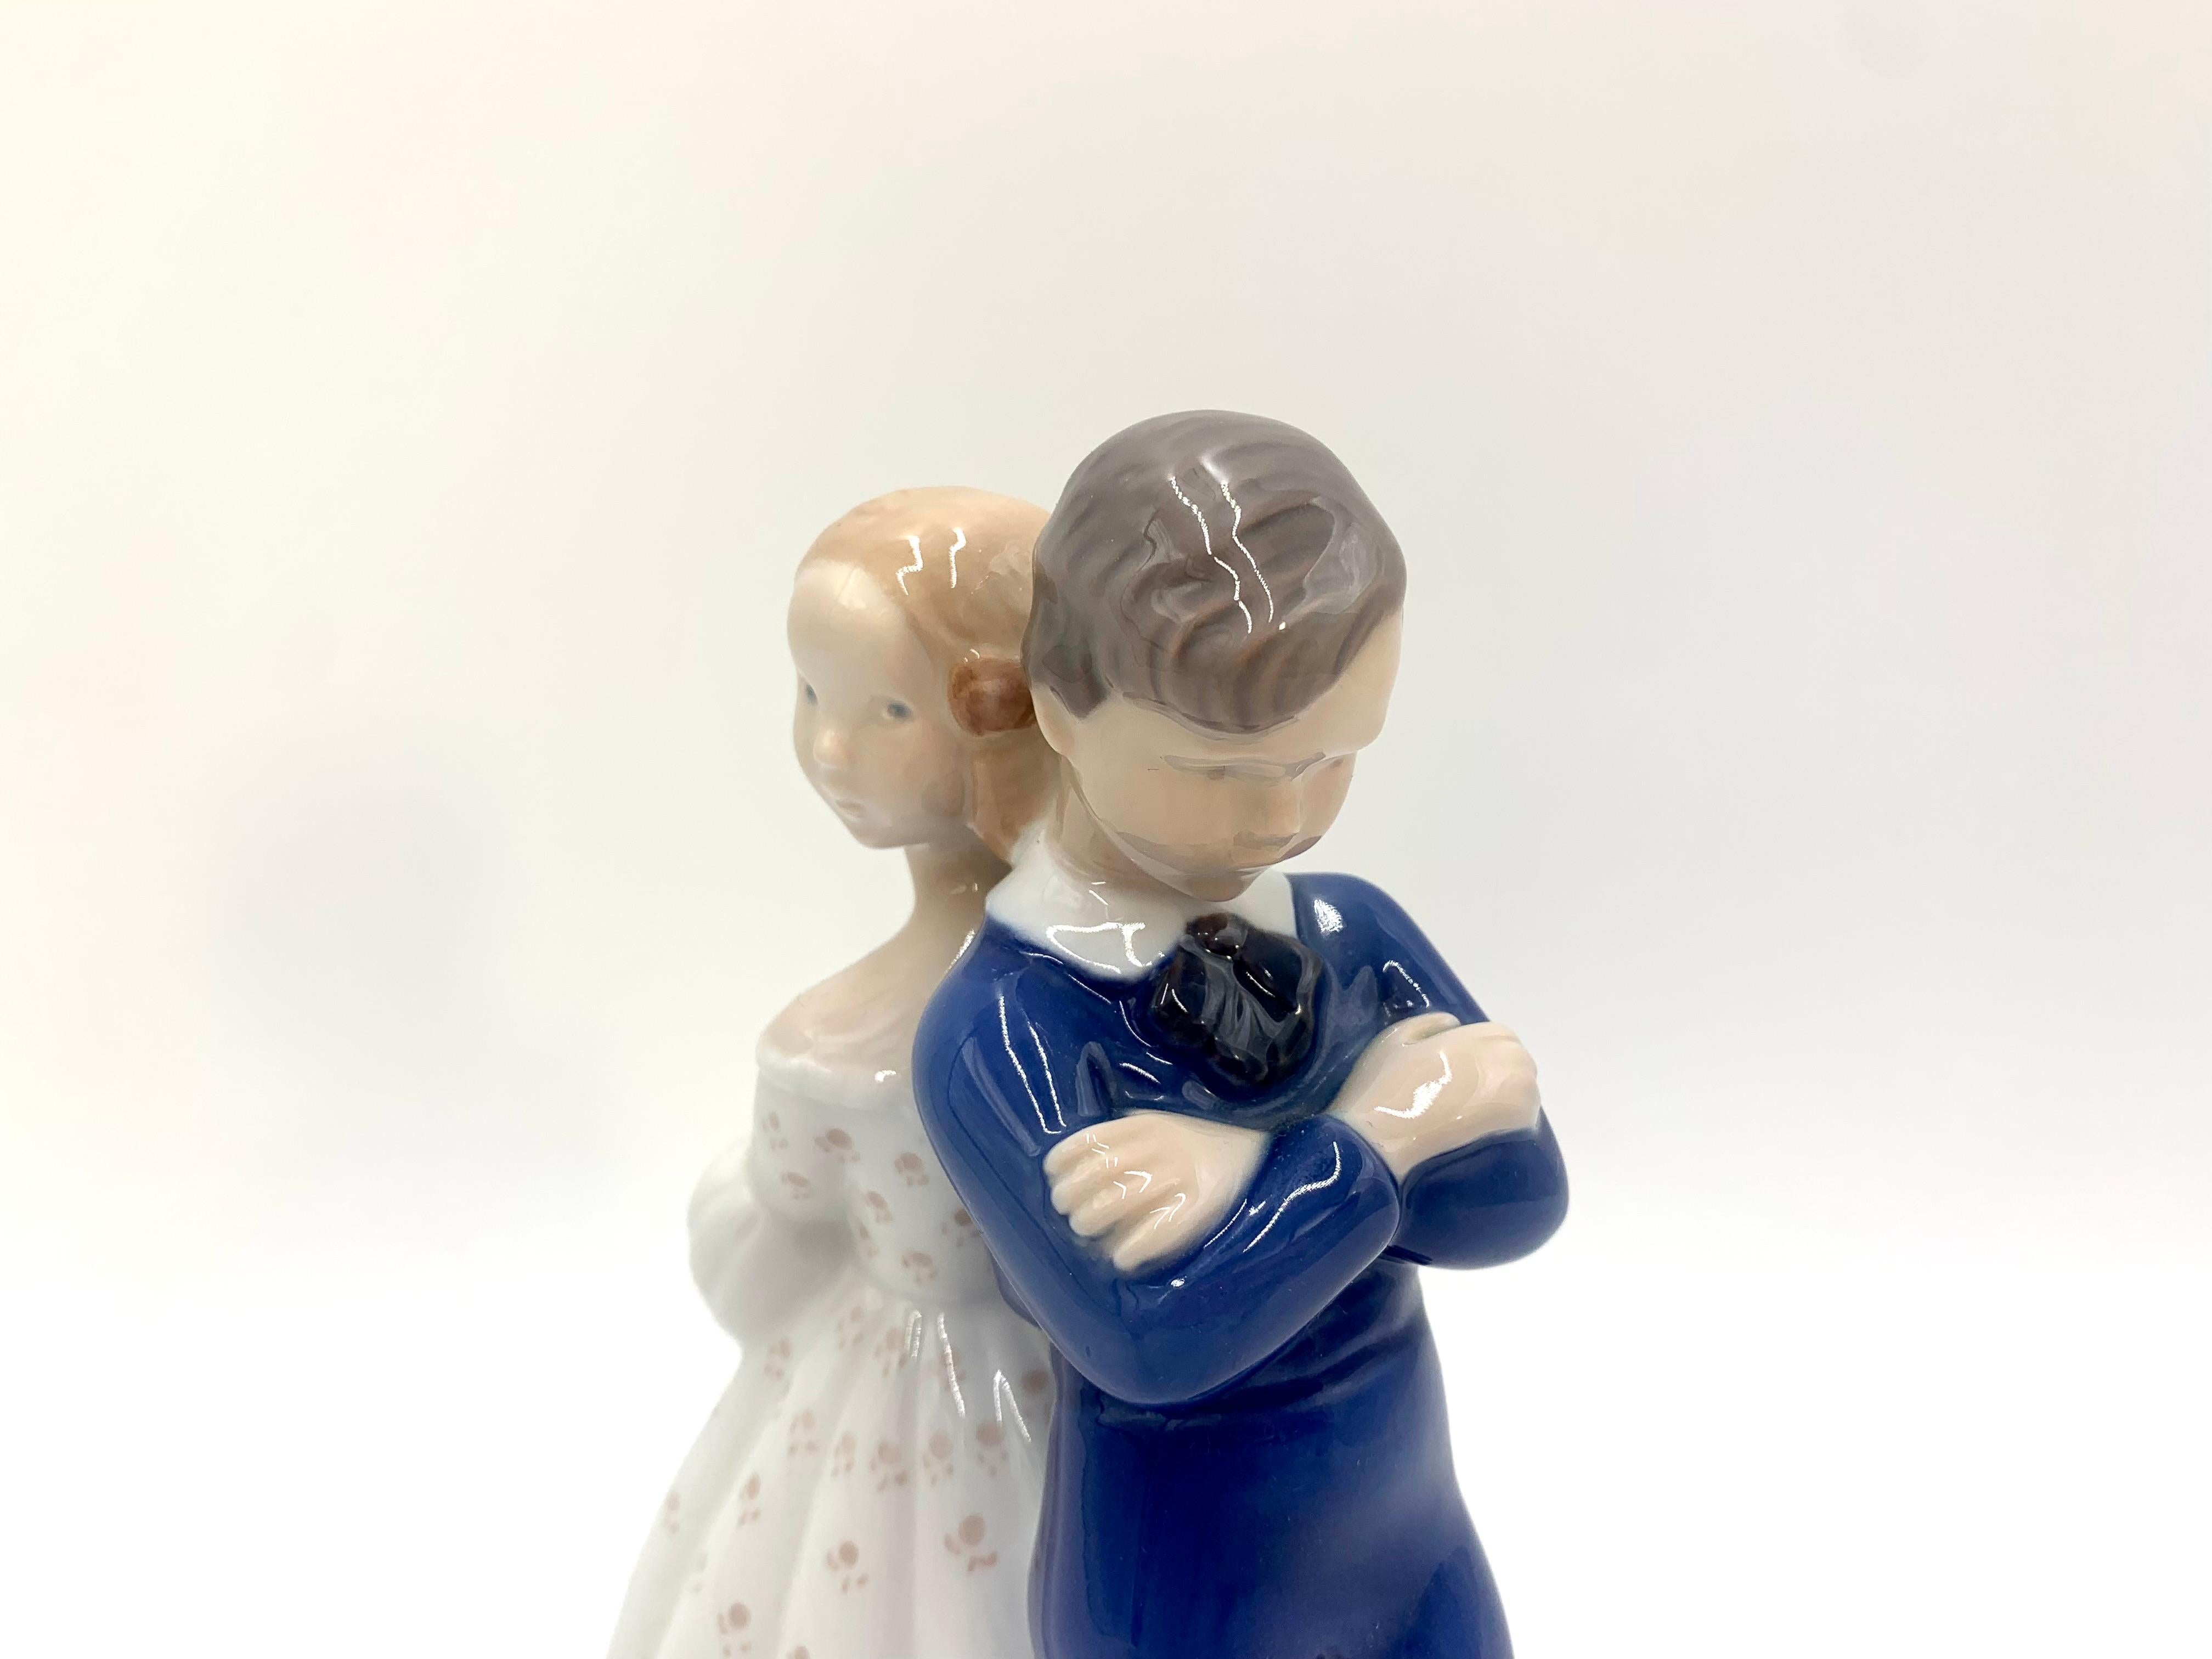 Danish Porcelain Figurine of a Couple, Bing & Grondahl, Denmark